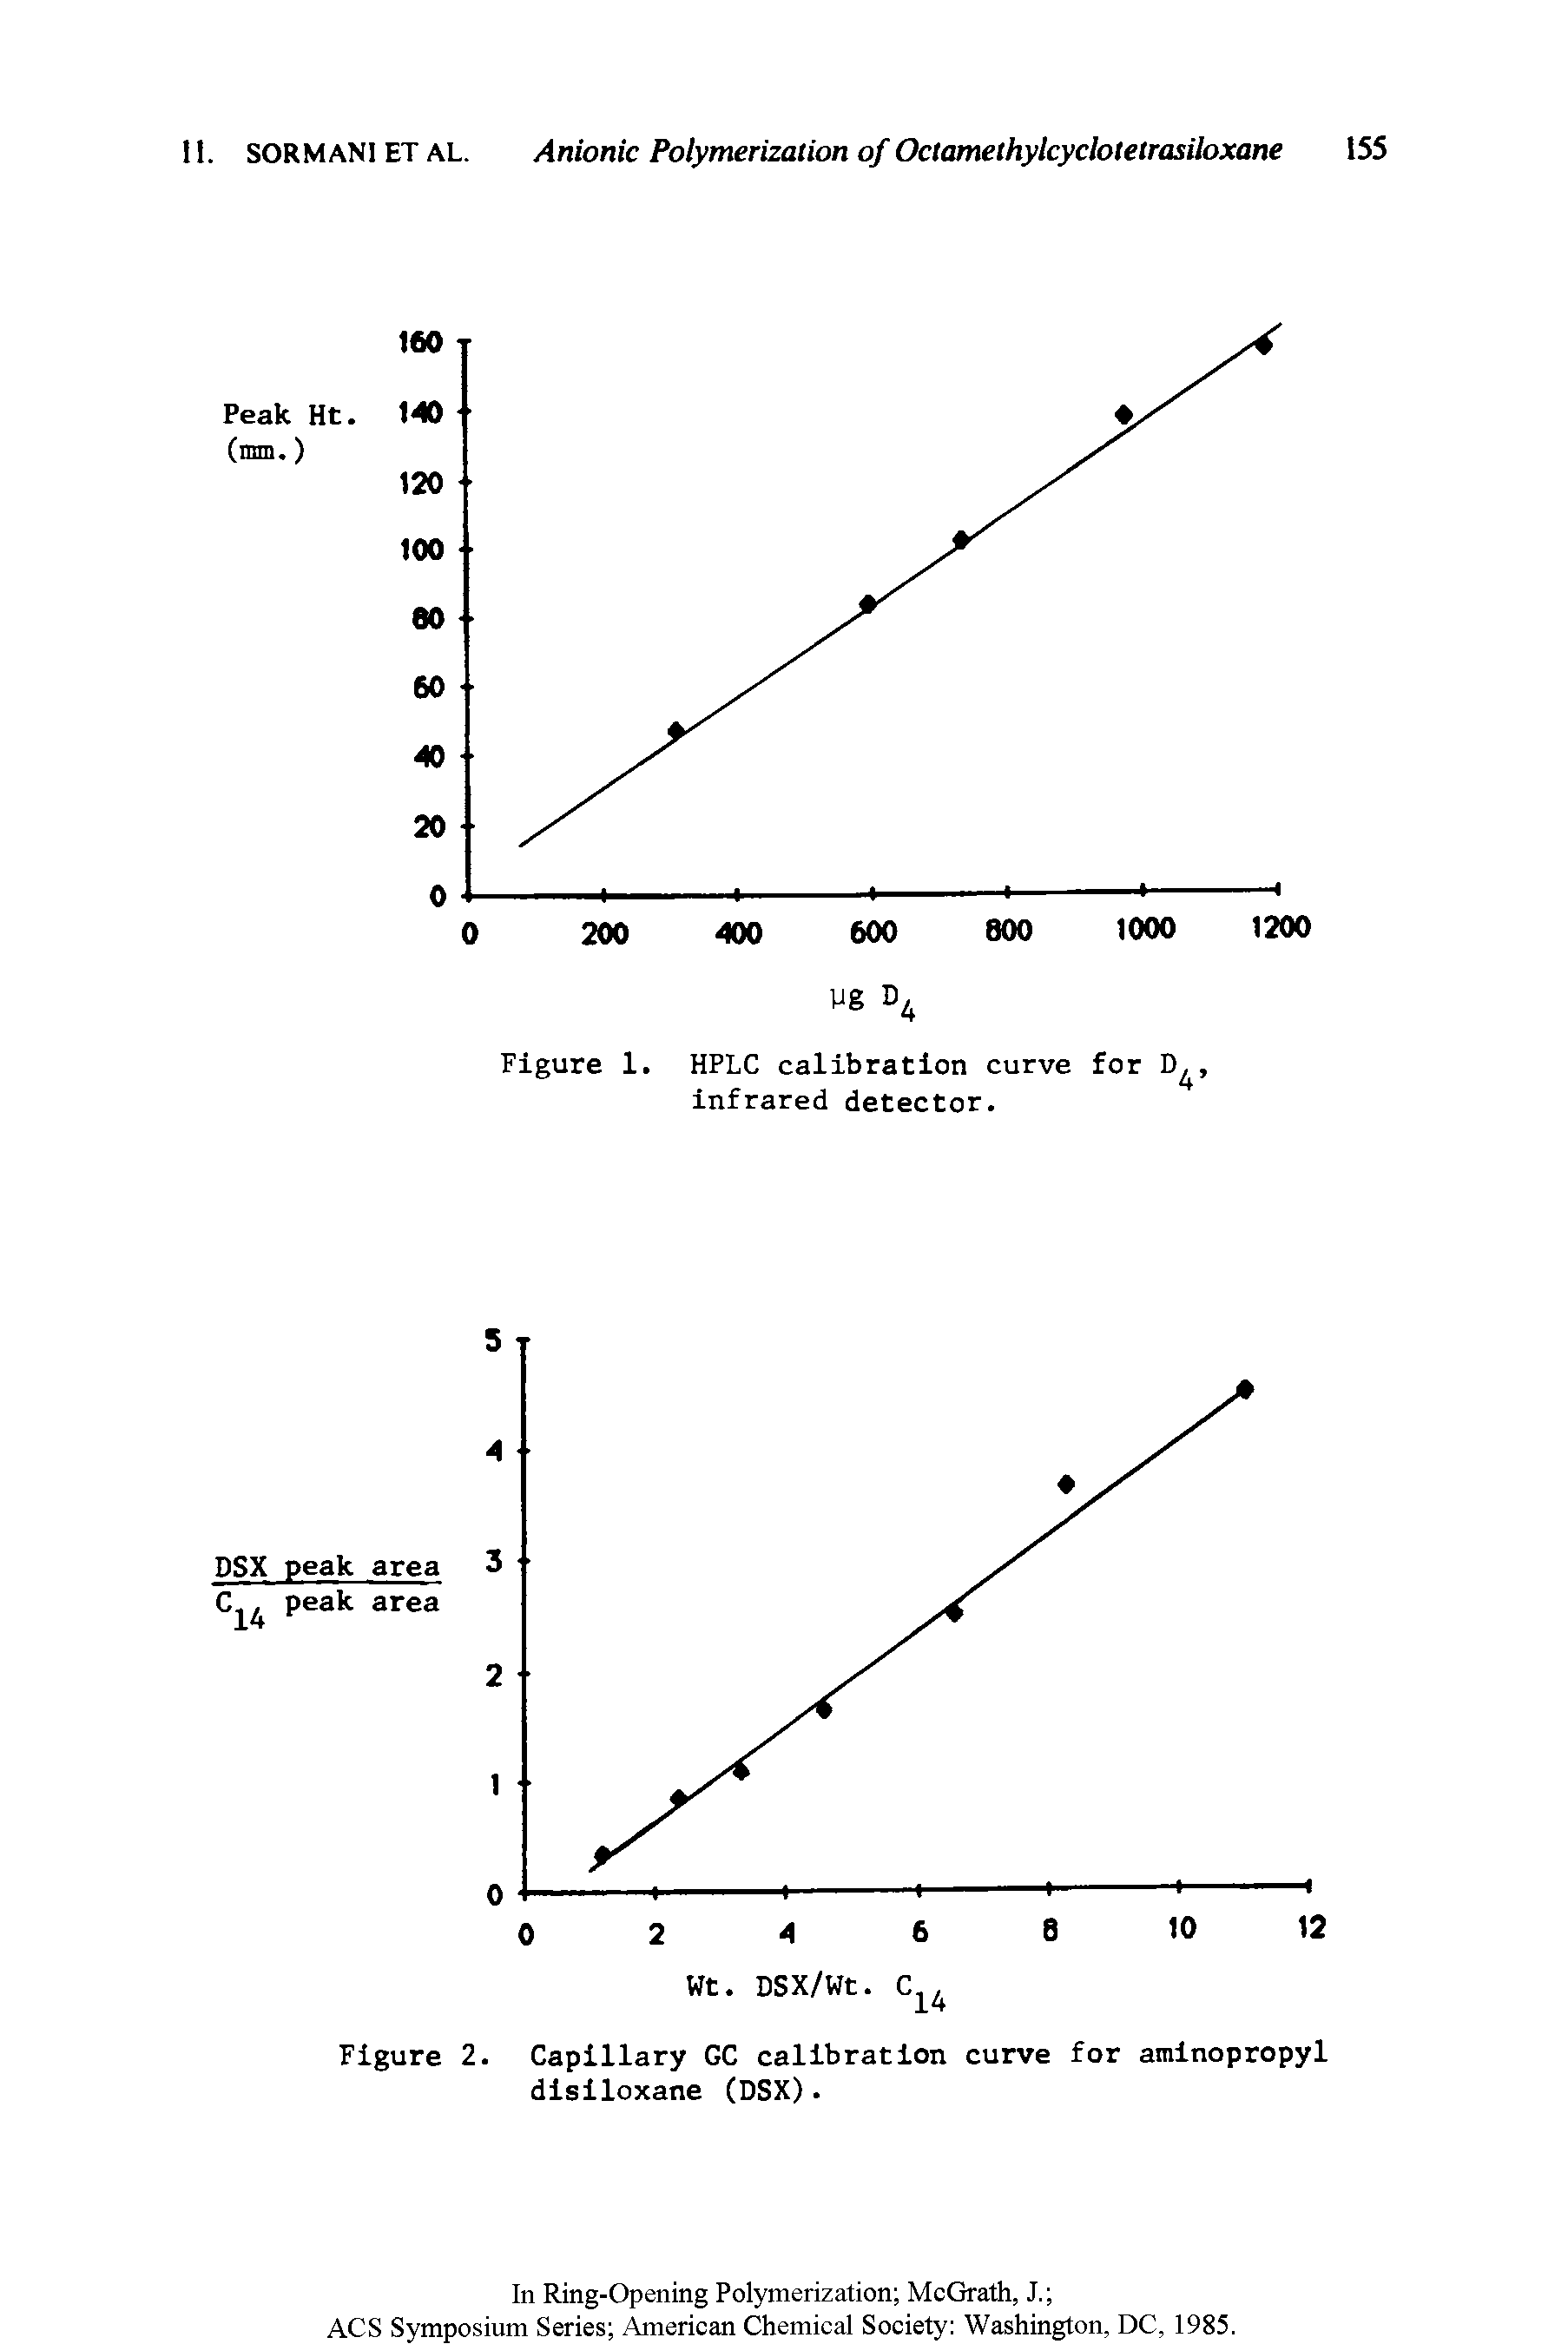 Figure 1. HPLC calibration curve for D, infrared detector.